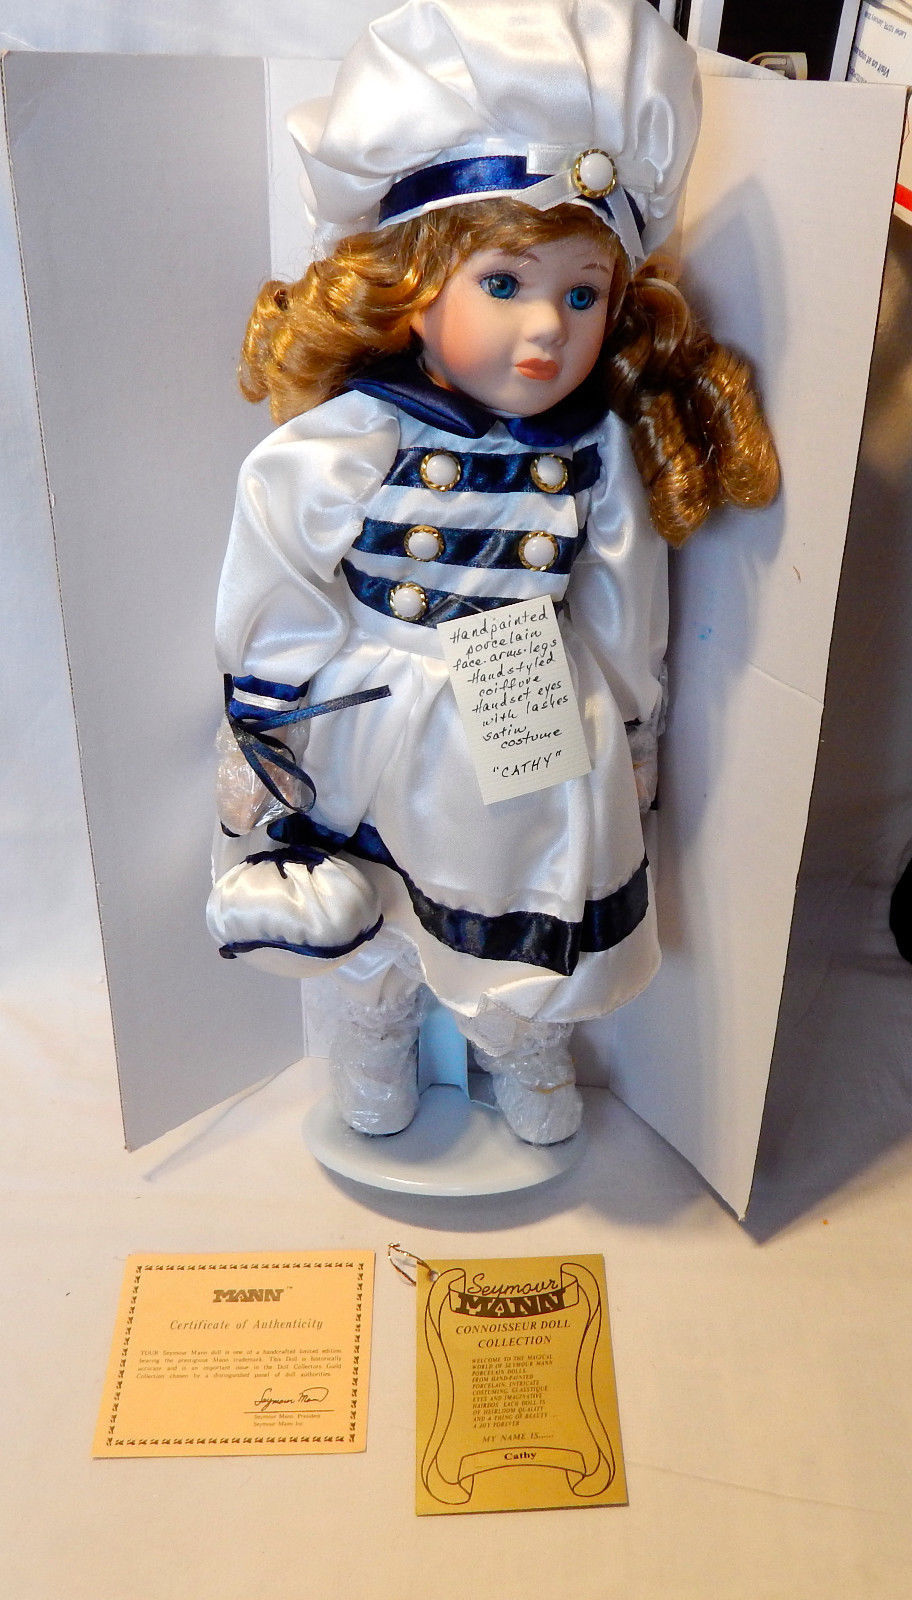 seymour mann connoisseur doll collection